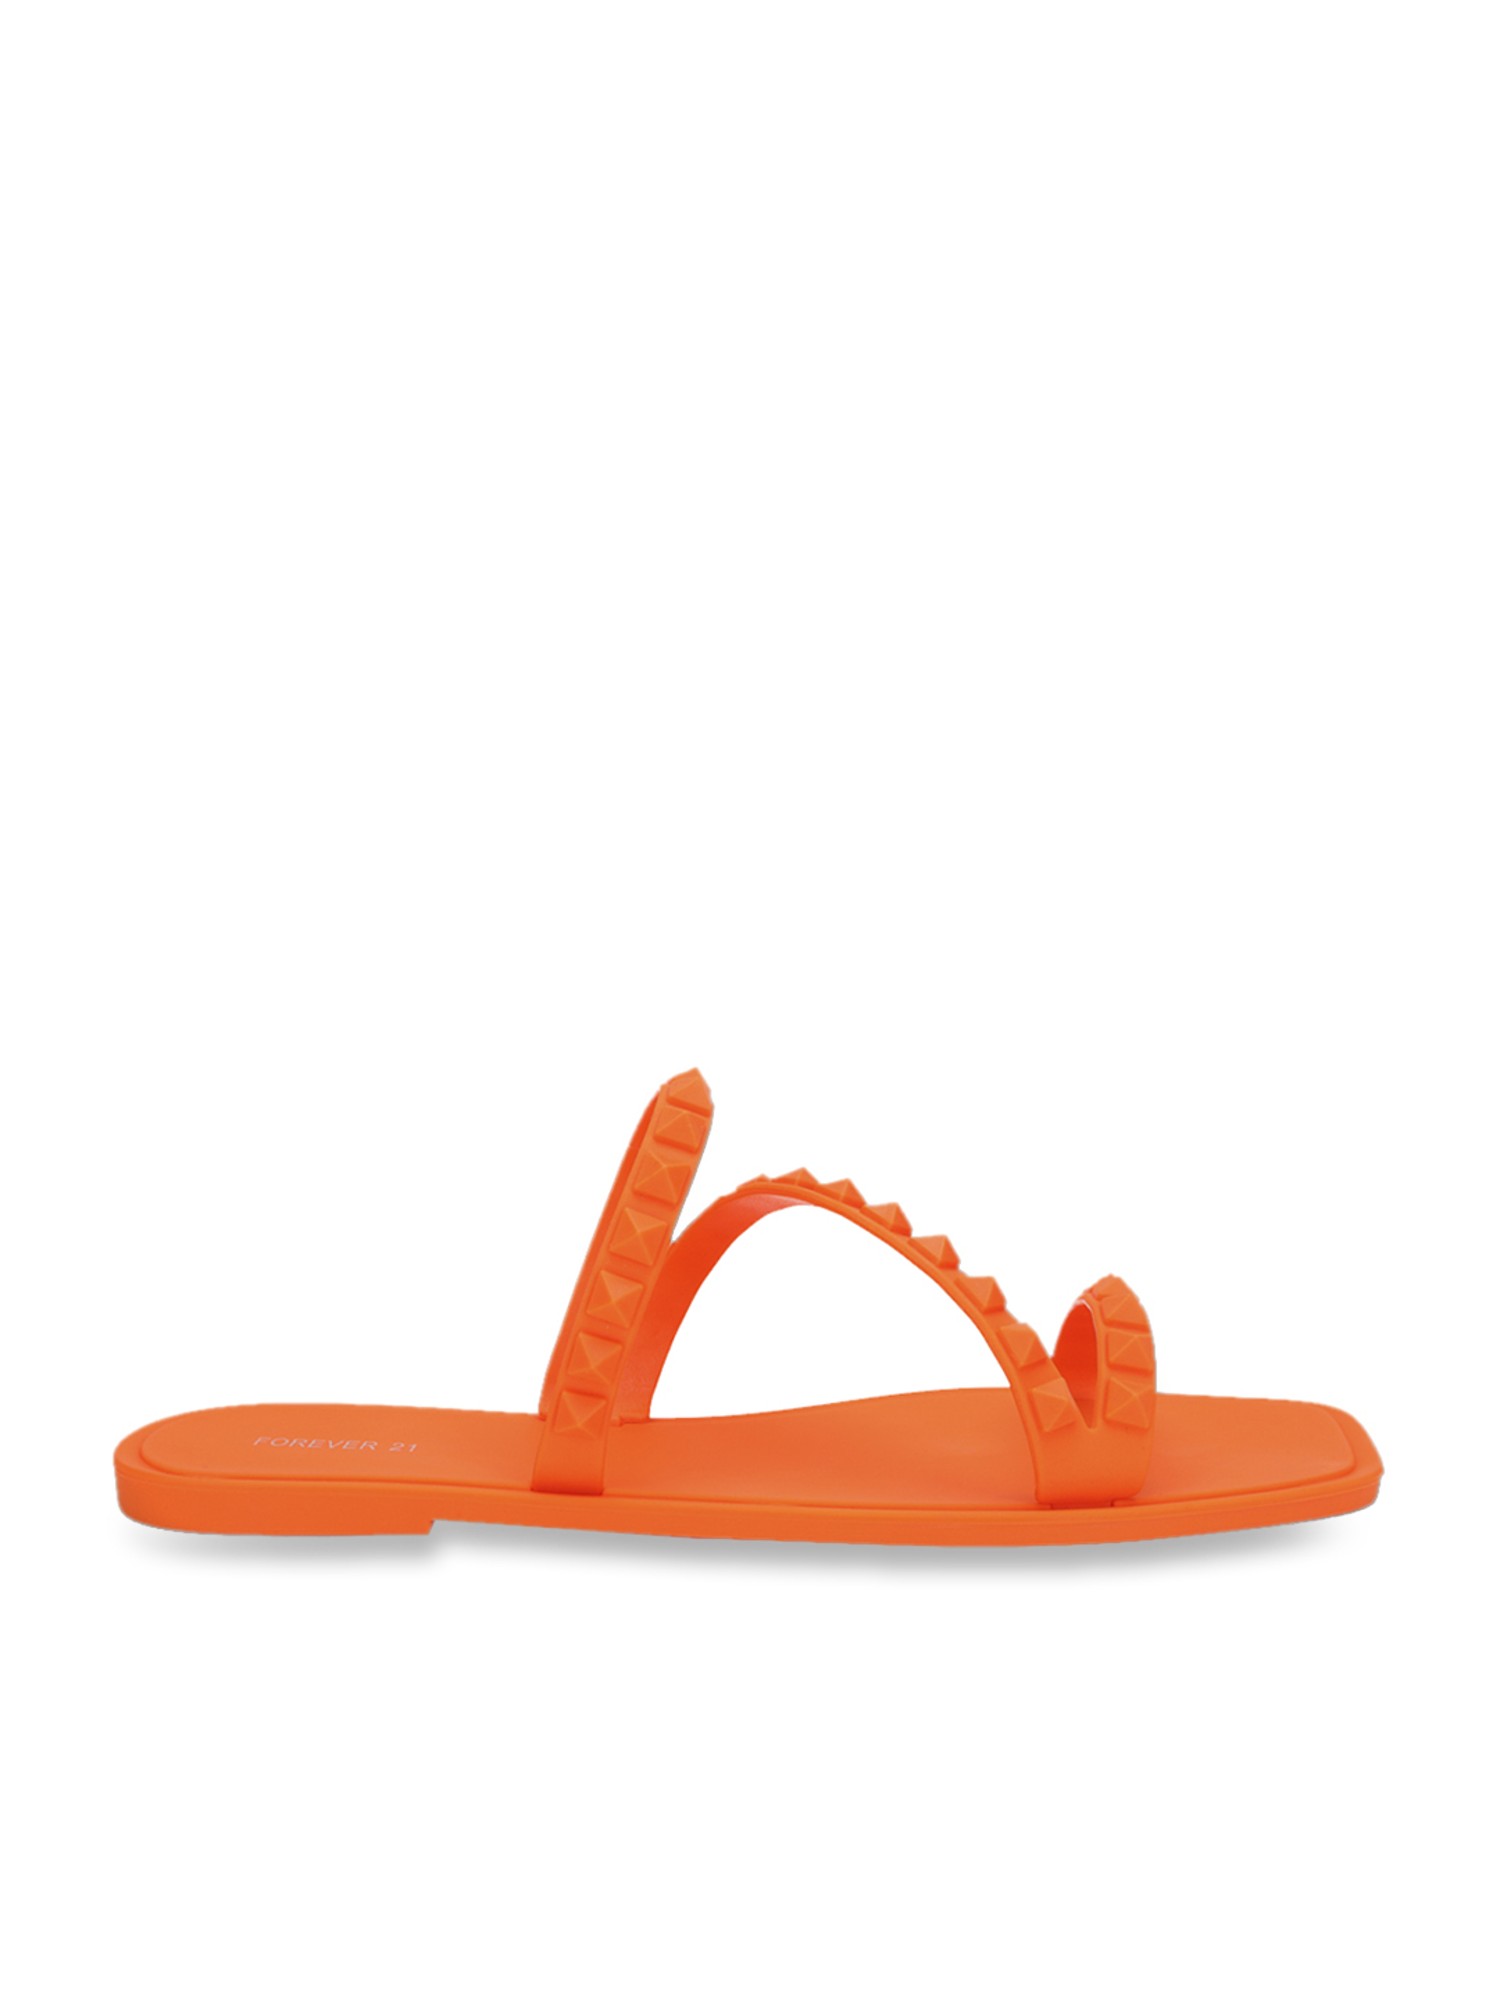 Forever 21 F21 Mustard Ankle Strap Platform Wedges Heels Shoes  -Women's 6.5 -New | eBay